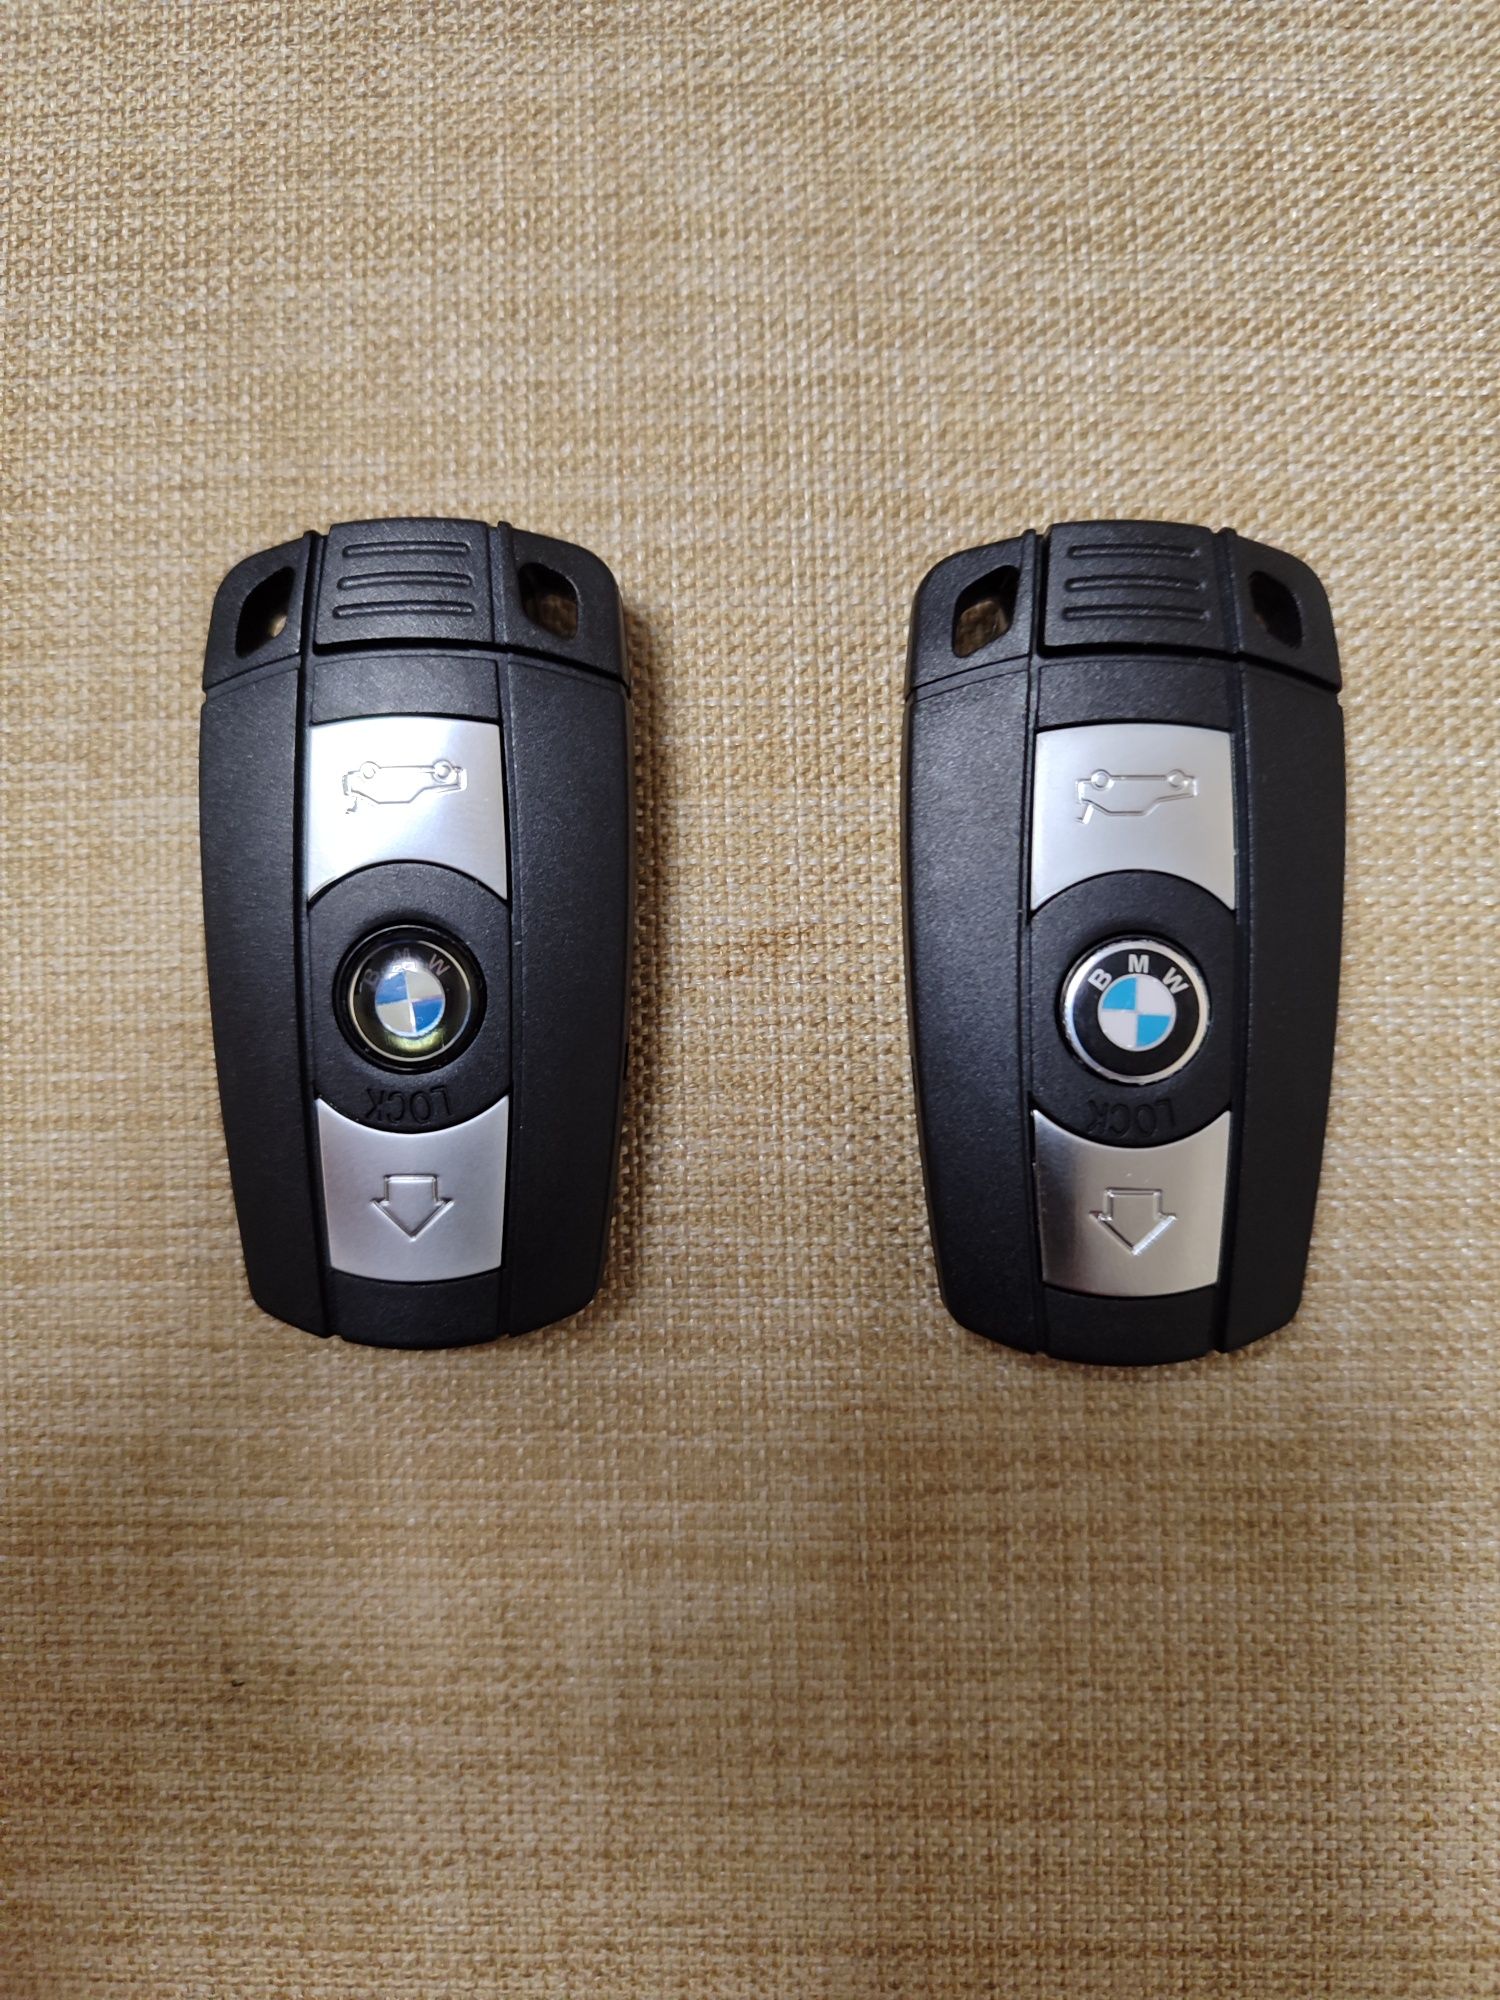 СмартКлюч BMW /433/868 МГц  / CAS3+ /
700.00грн.